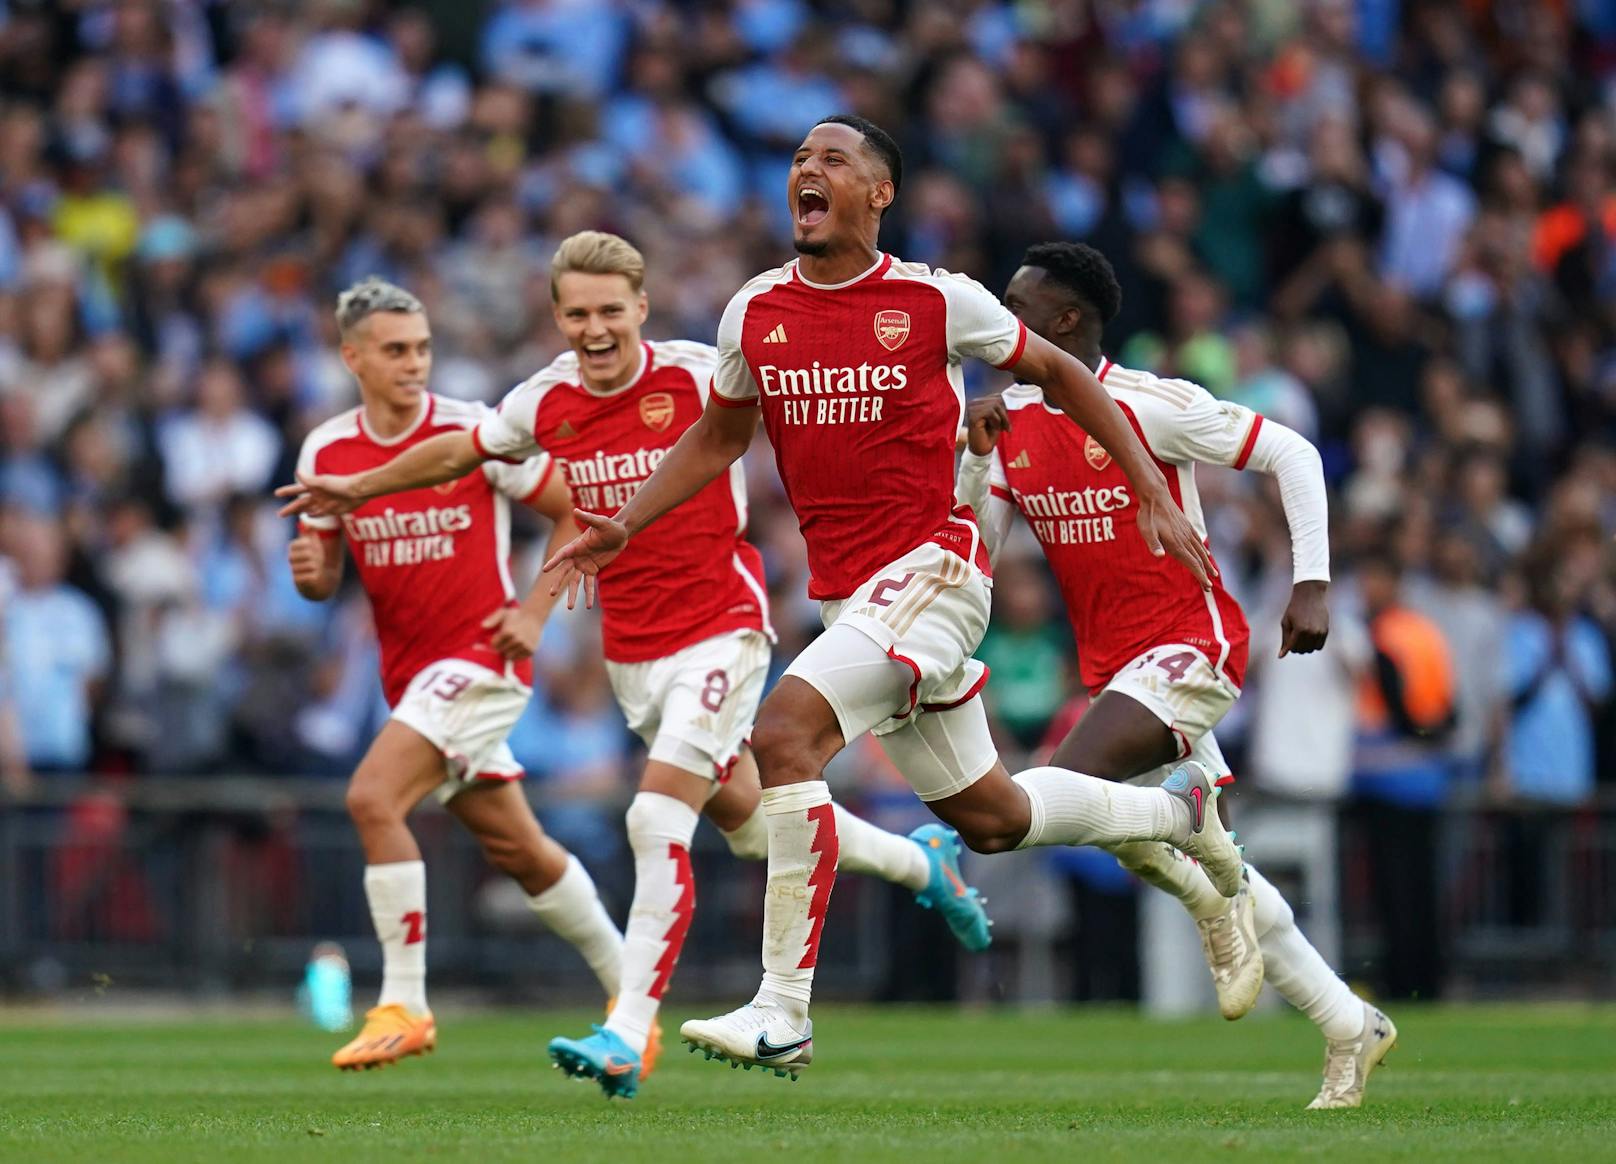 Arsenal holt Titel! City-Stars patzen im Elfer-Krimi